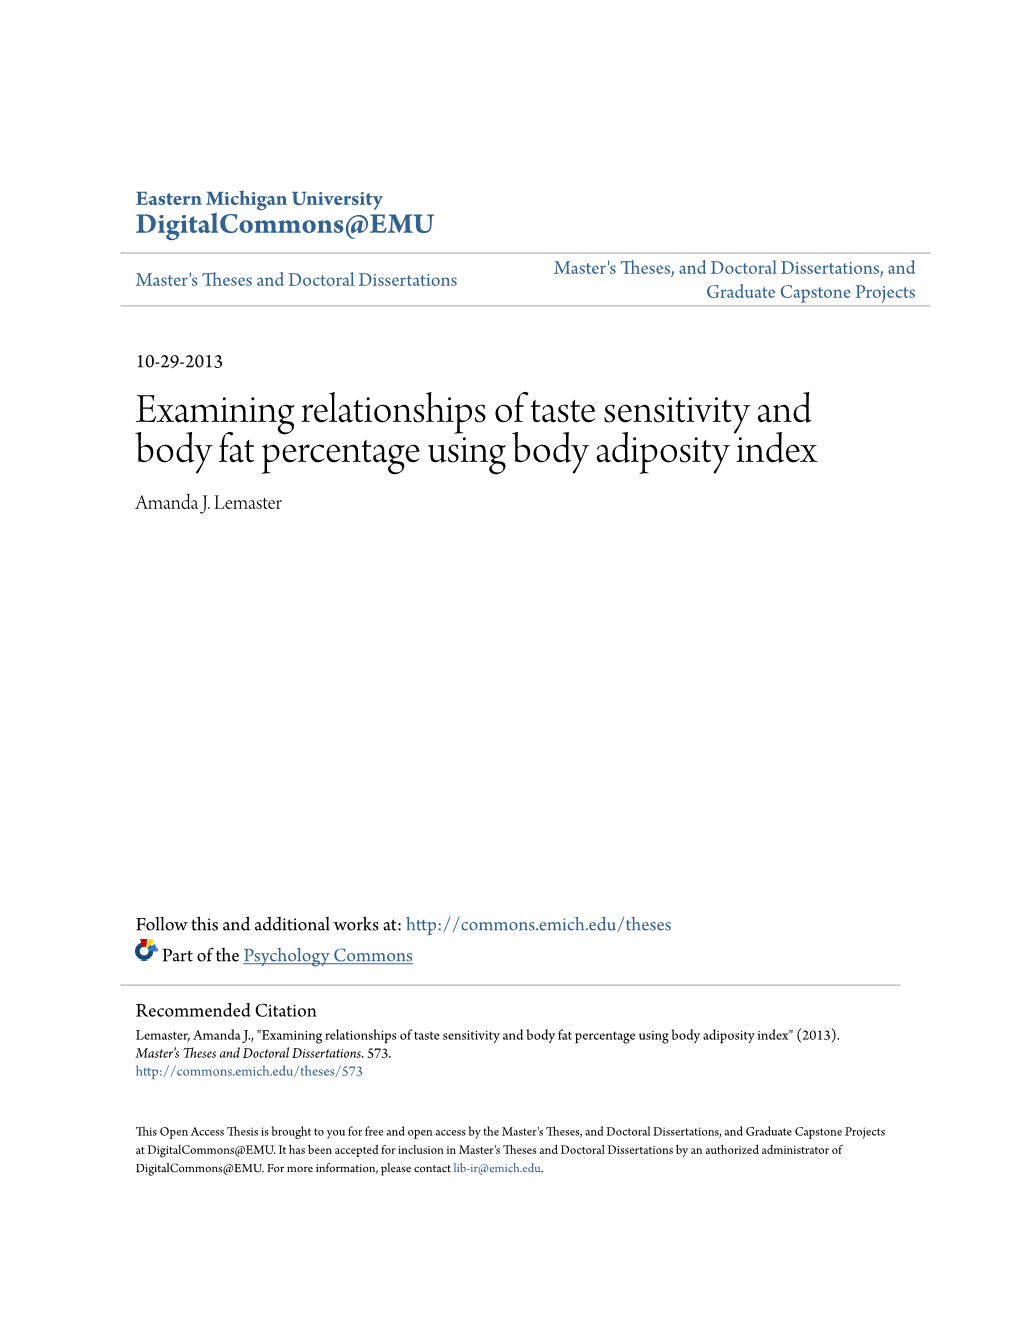 Examining Relationships of Taste Sensitivity and Body Fat Percentage Using Body Adiposity Index Amanda J